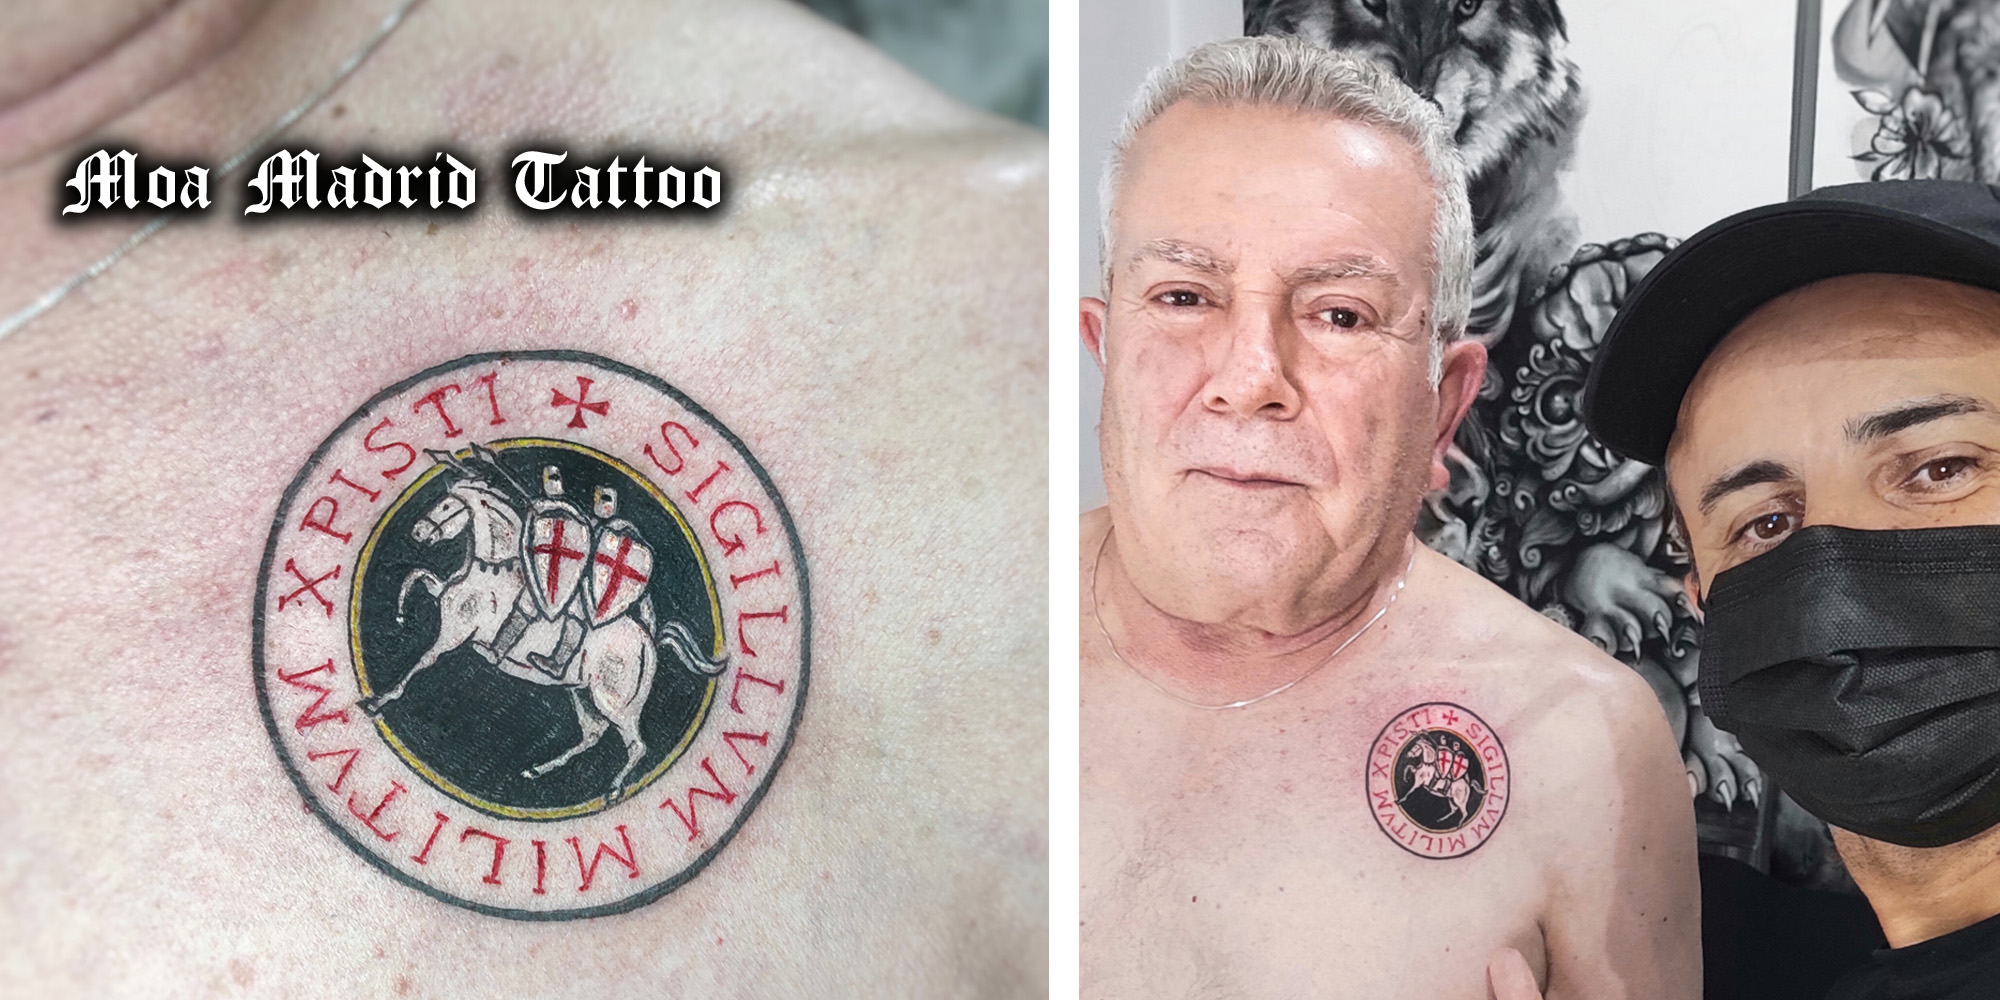 Opiniones de clientes sobre Moa Madrid Tattoo